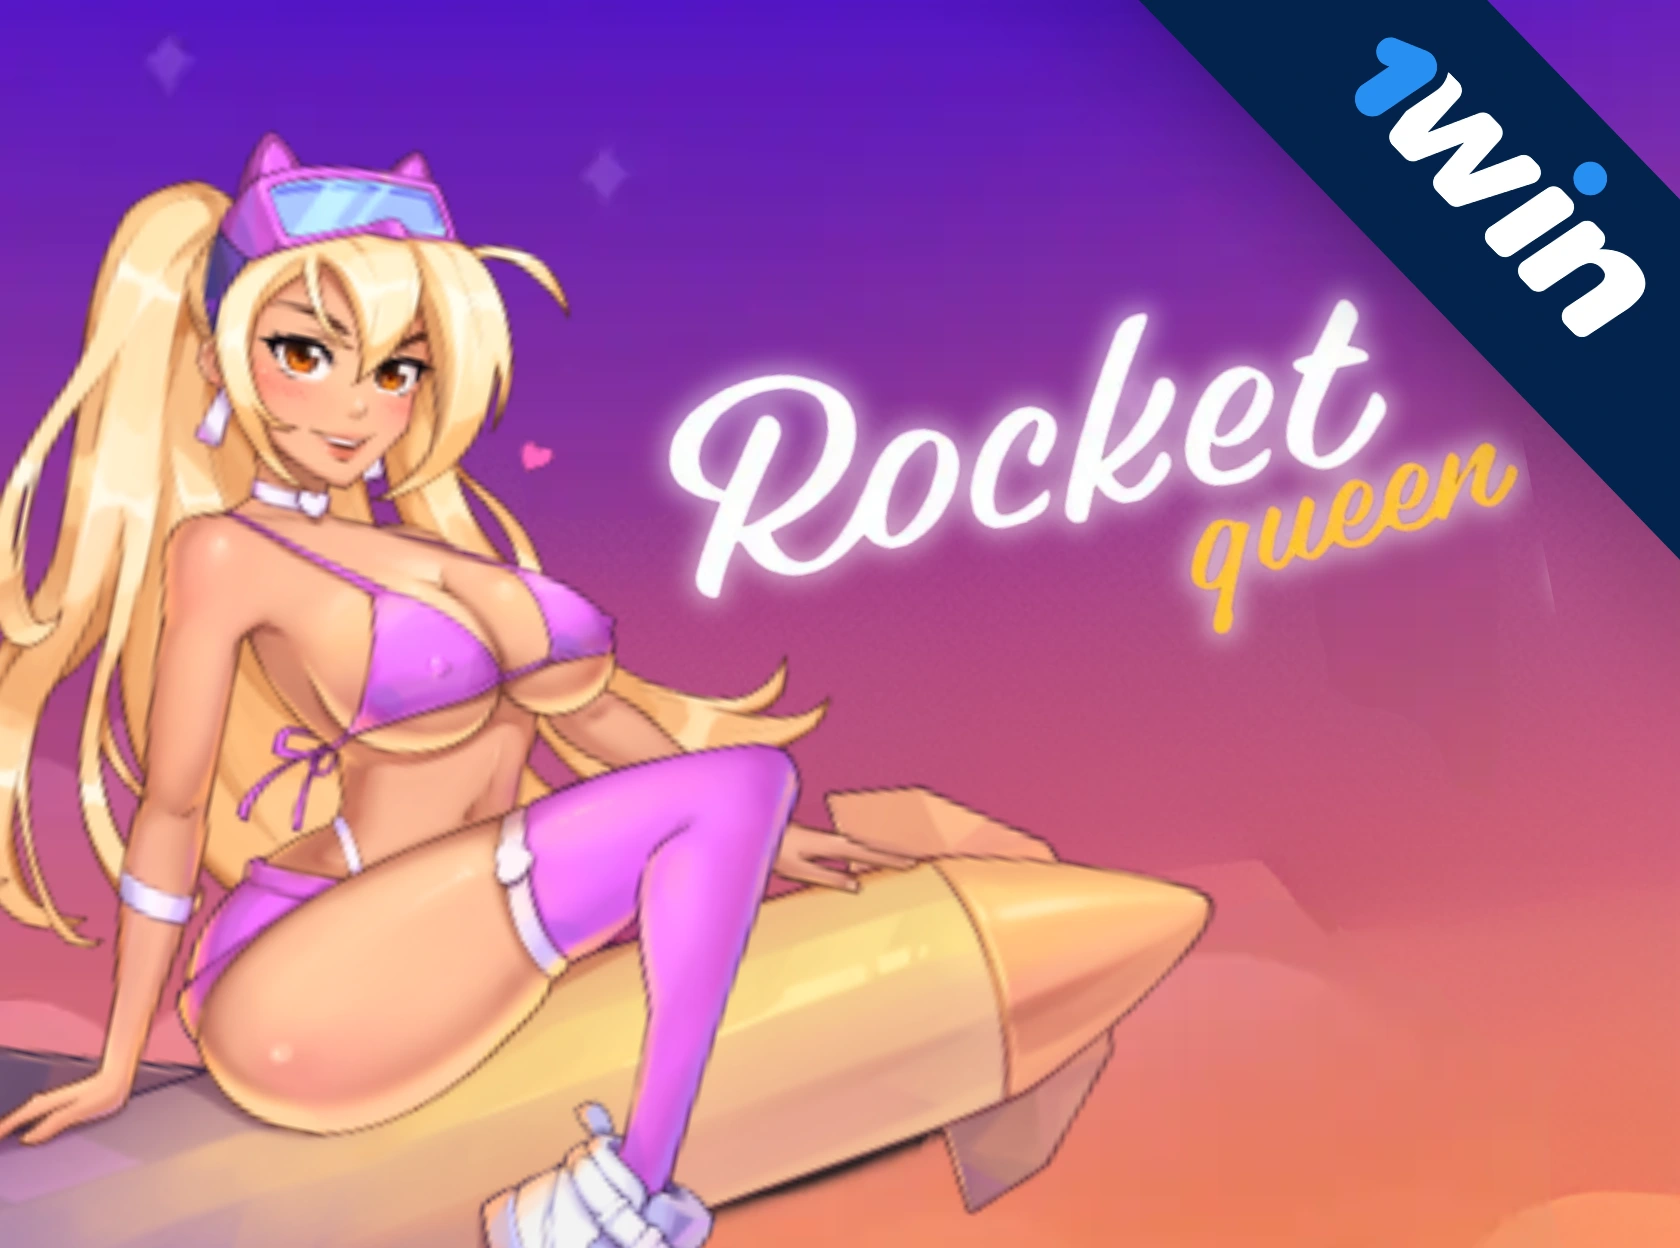 Rocket Queen — взрывной хит 1win!